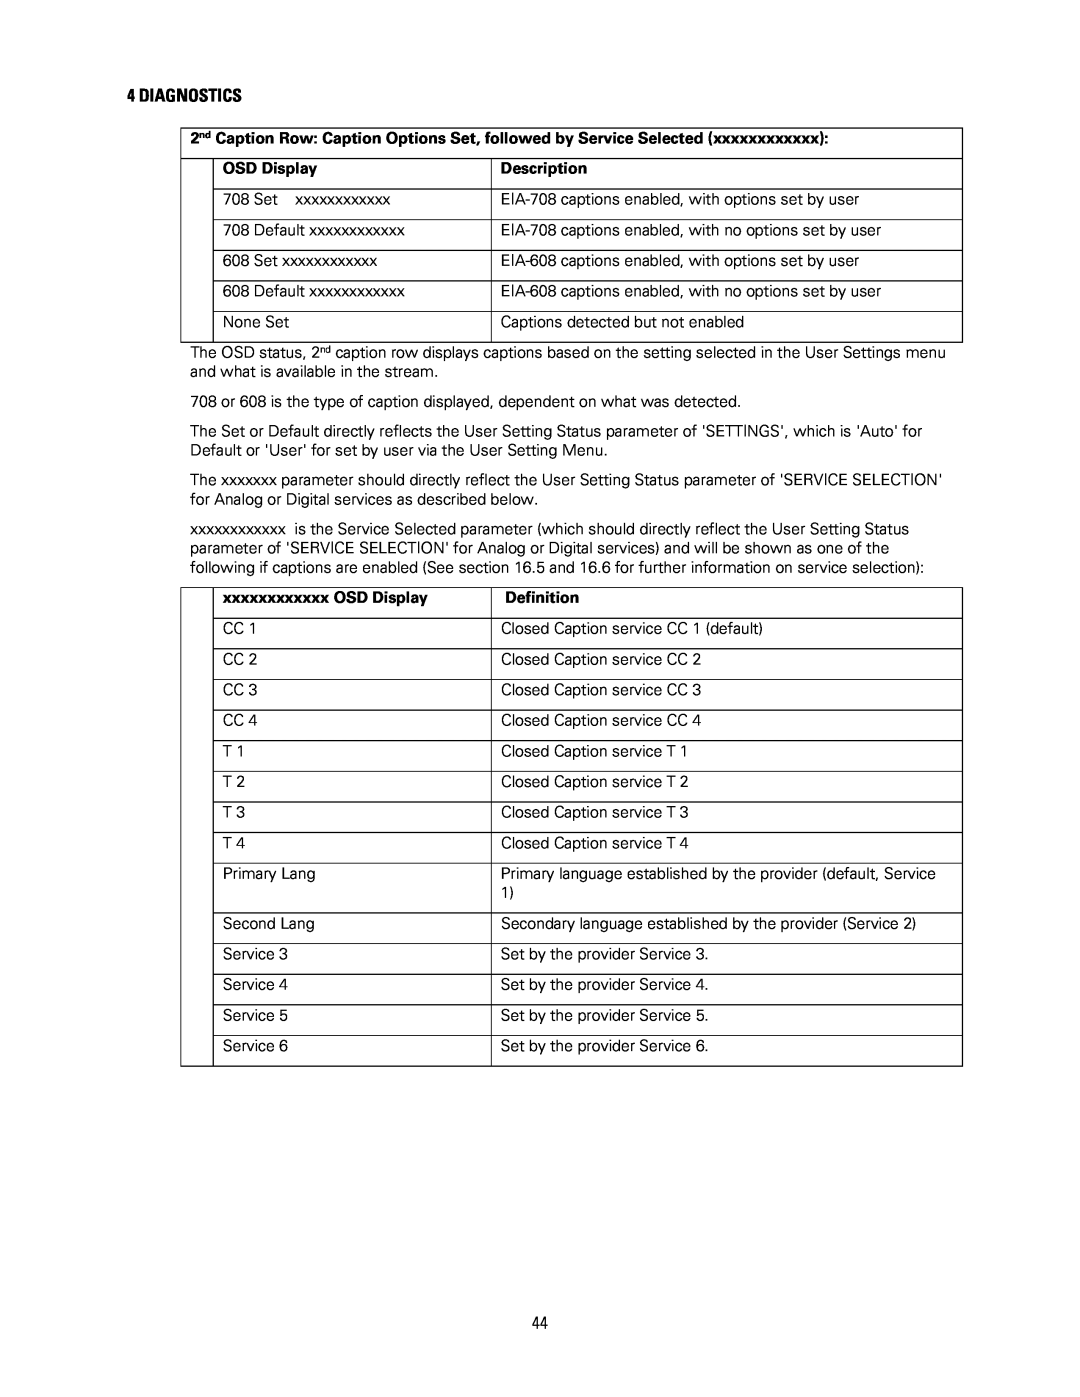 Motorola DCH3200 installation manual Diagnostics, Description, xxxxxxxxxxxx OSD Display, Definition 